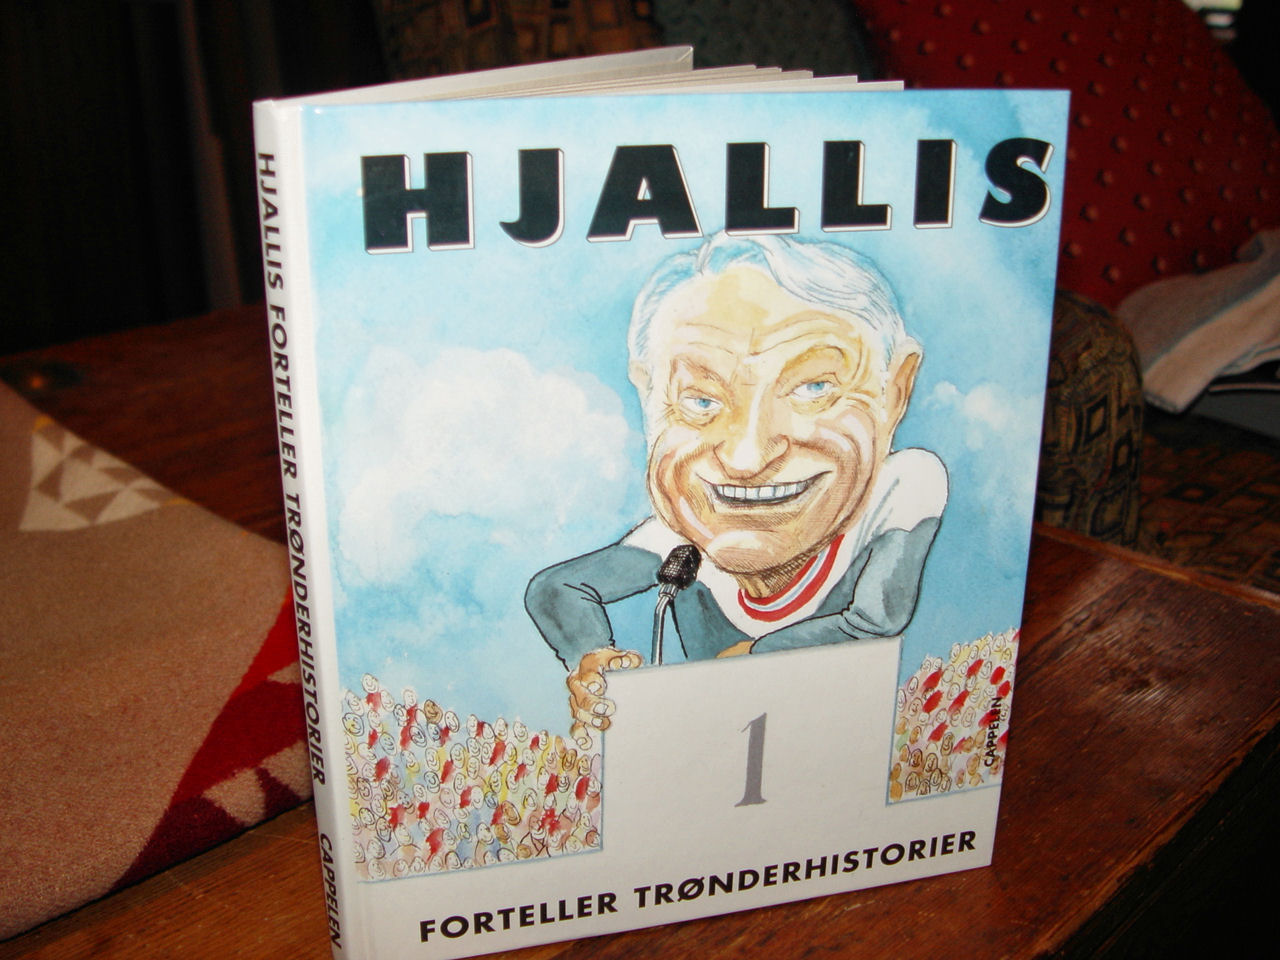 Hjallis Forteller
                        Tronderhistorier by Hjalmar Andersen 1991 -
                        Norwegian Joke Book